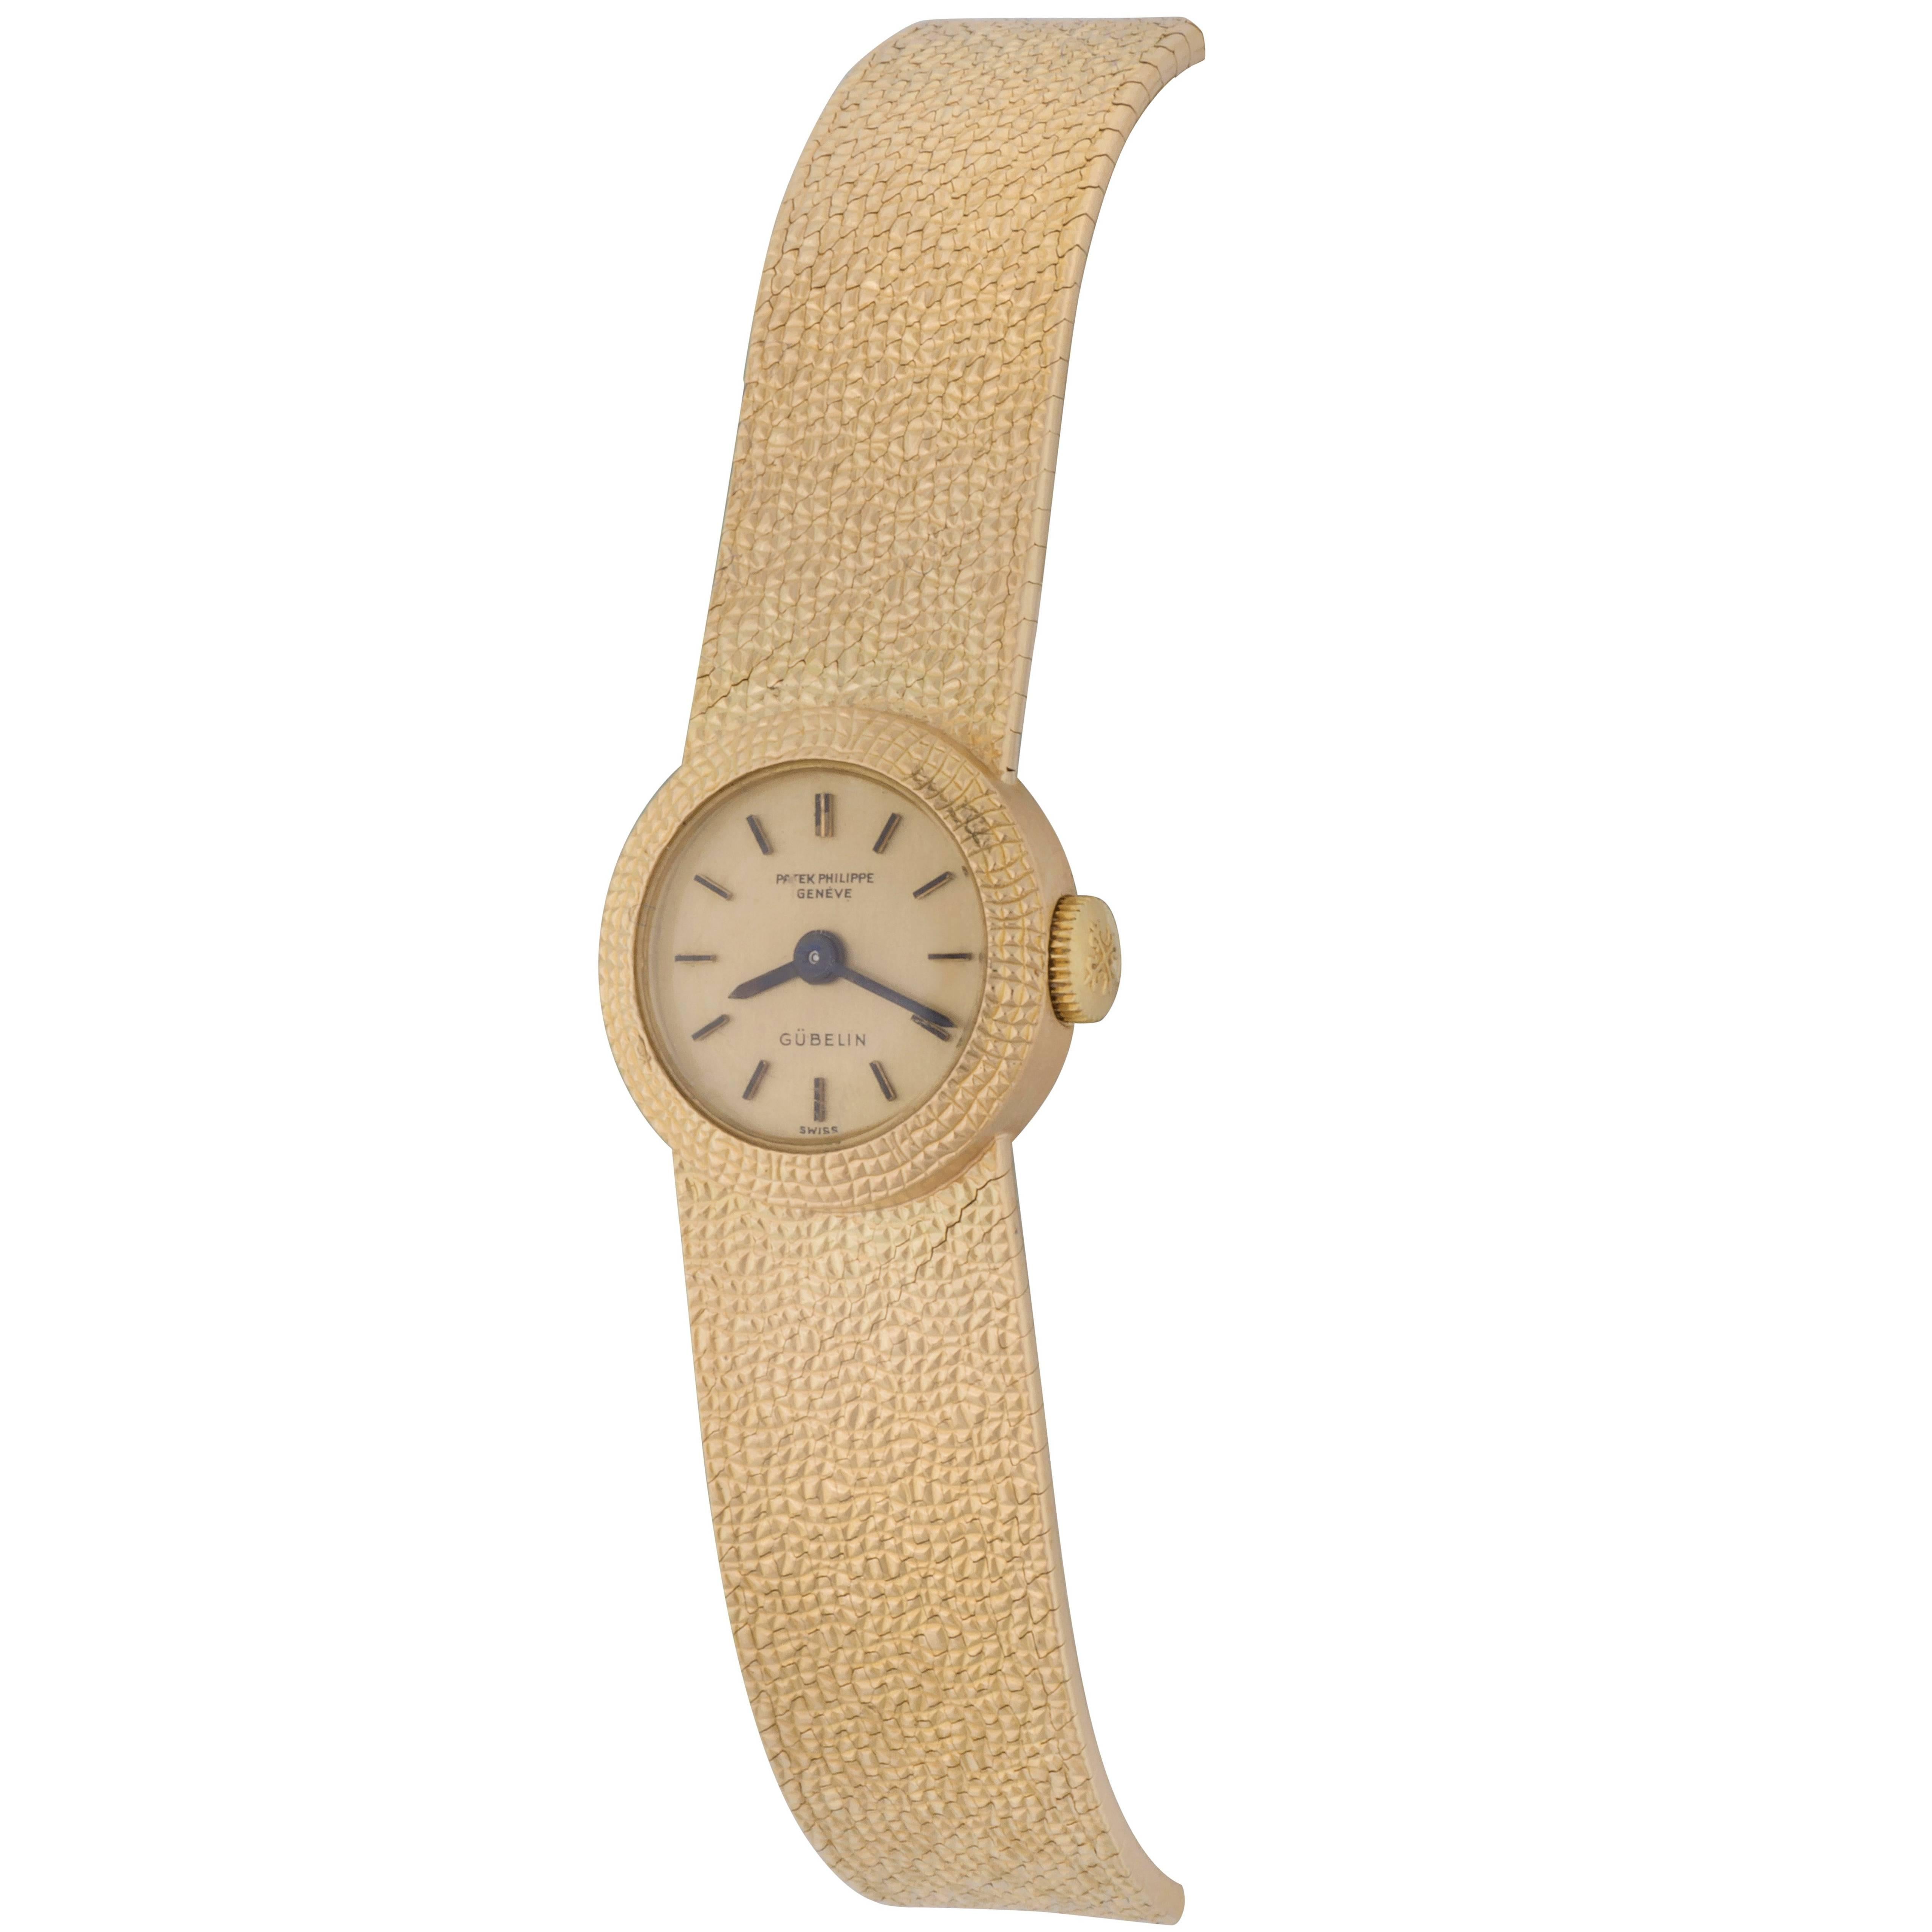 Patek Philippe Ladies Yellow Gold Manual Wind Wristwatch Ref 3306